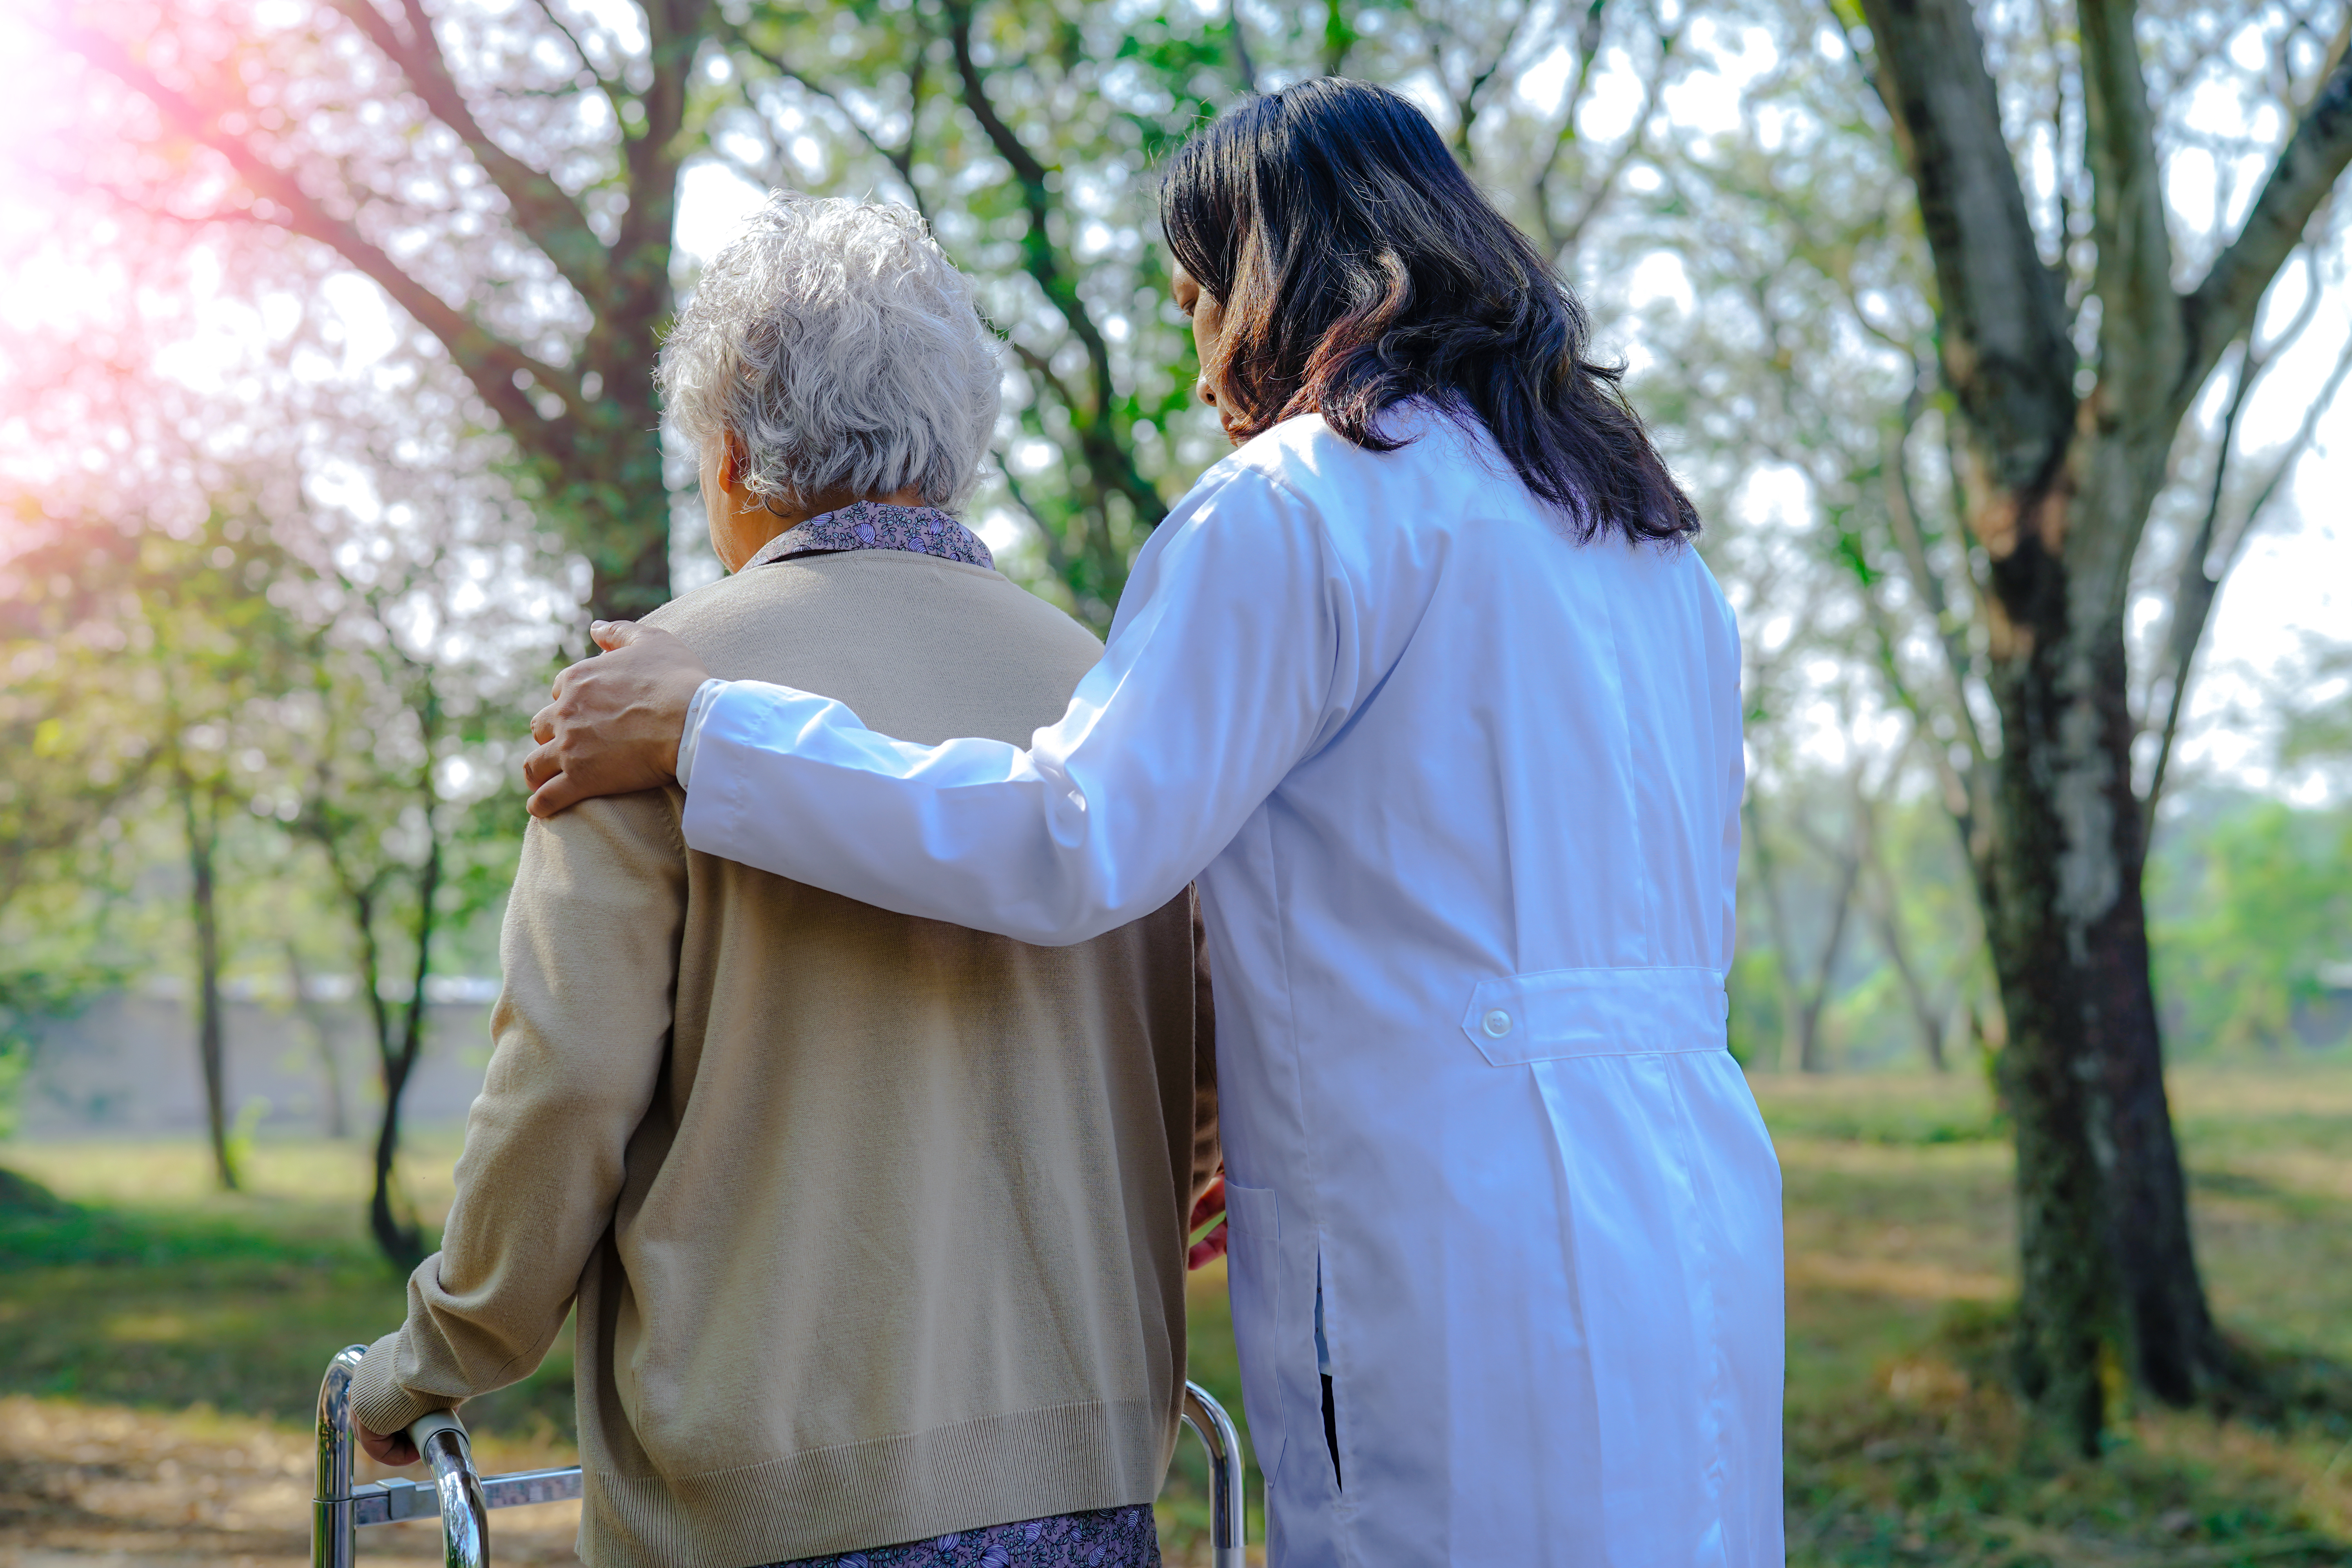 A doctor escorts an elderly woman through a tree-filled park